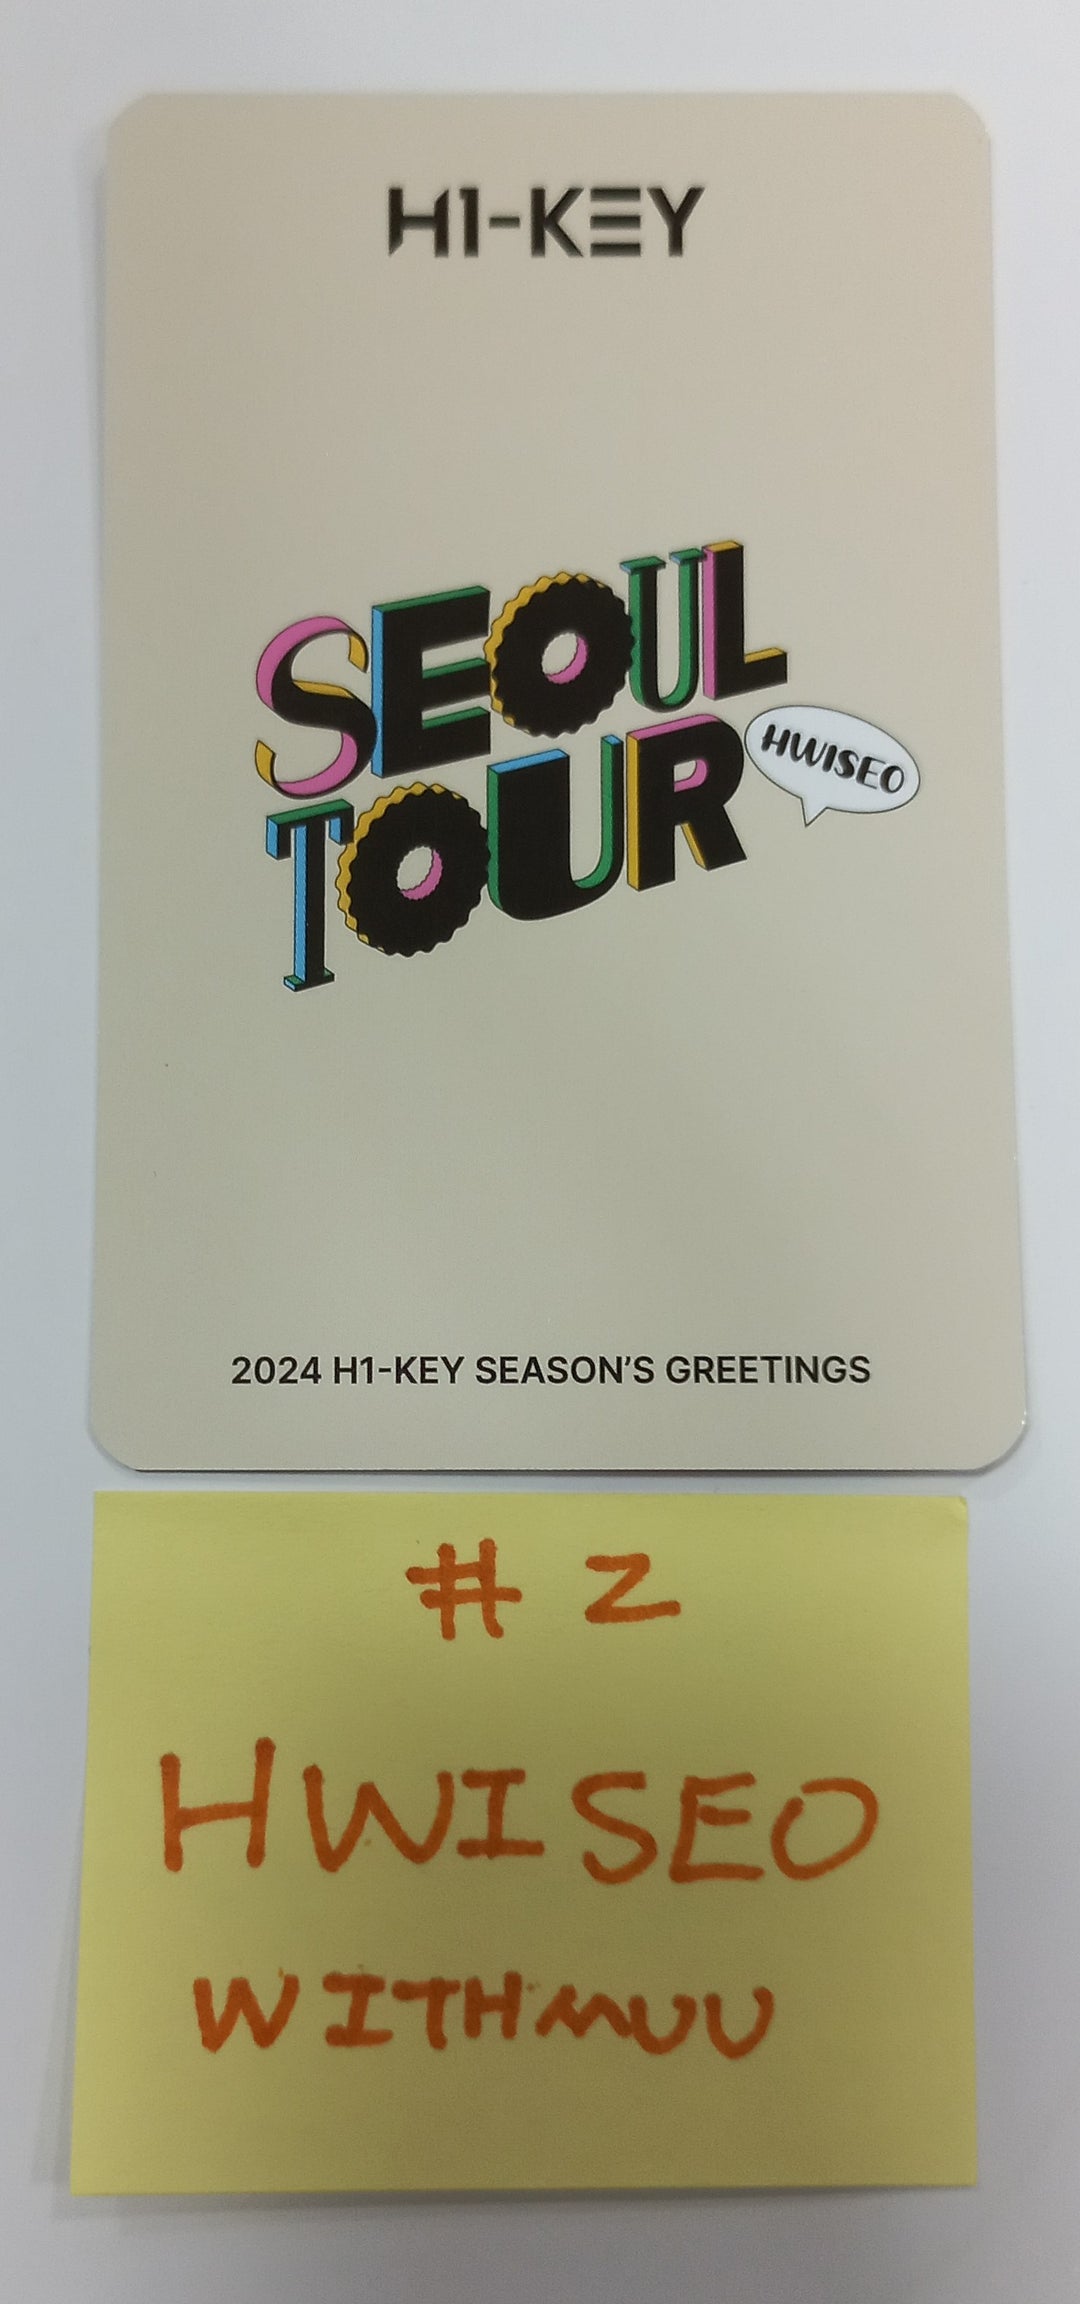 Seoi, Hwiseo (Of H1-KEY) 2024 SEASON’S GREETINGS "SEOUL TOUR" - Hand Autographed(Signed) Photocard [23.12.29]